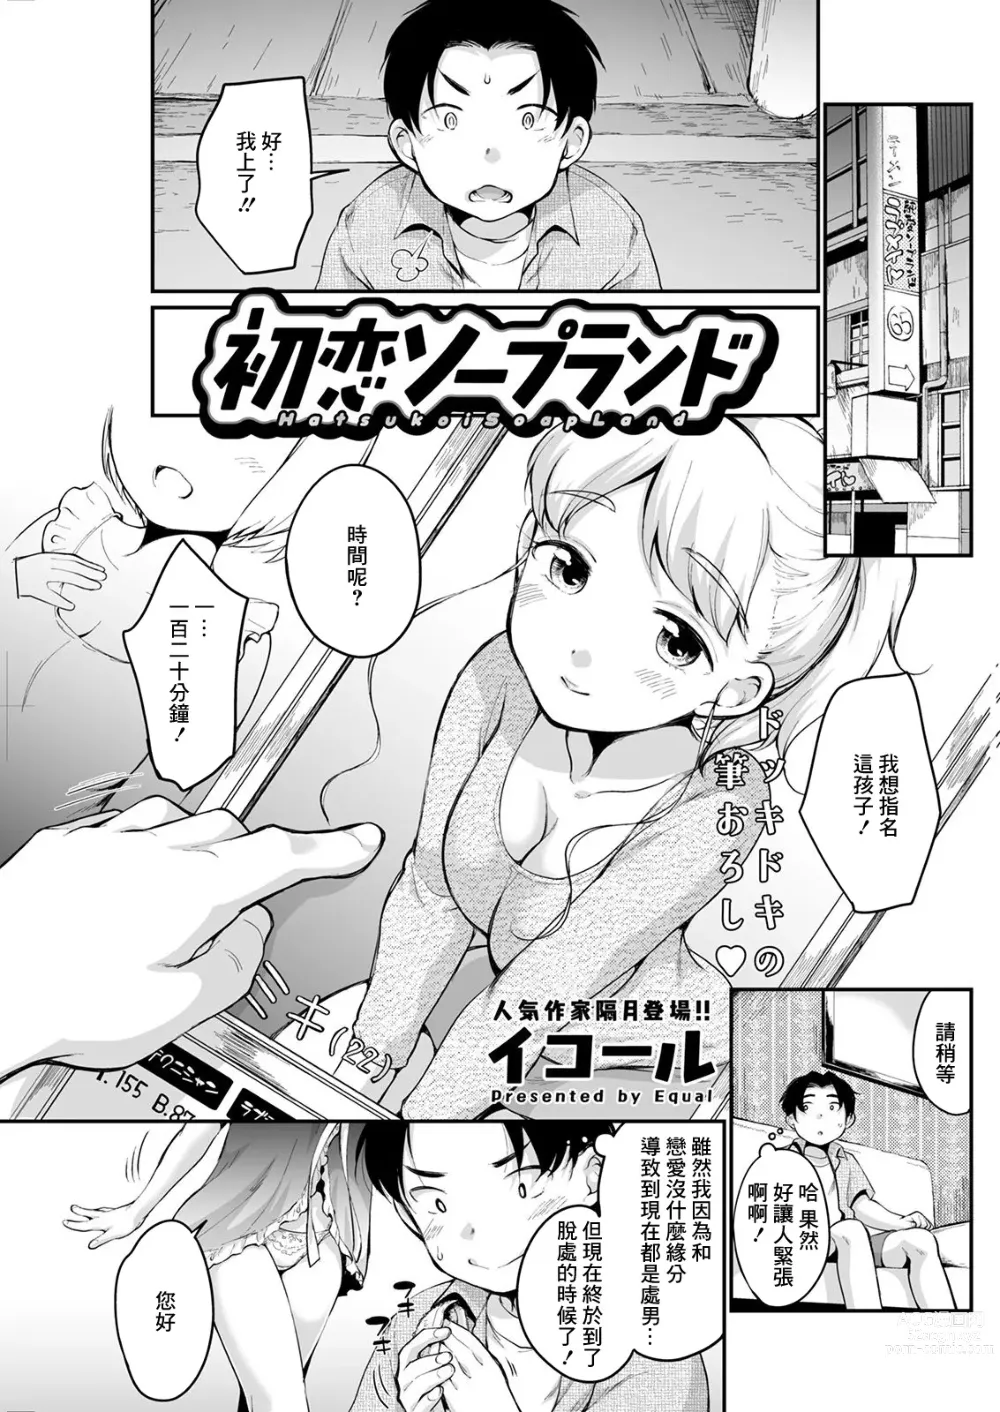 Page 1 of manga Hatsukoi Soapland